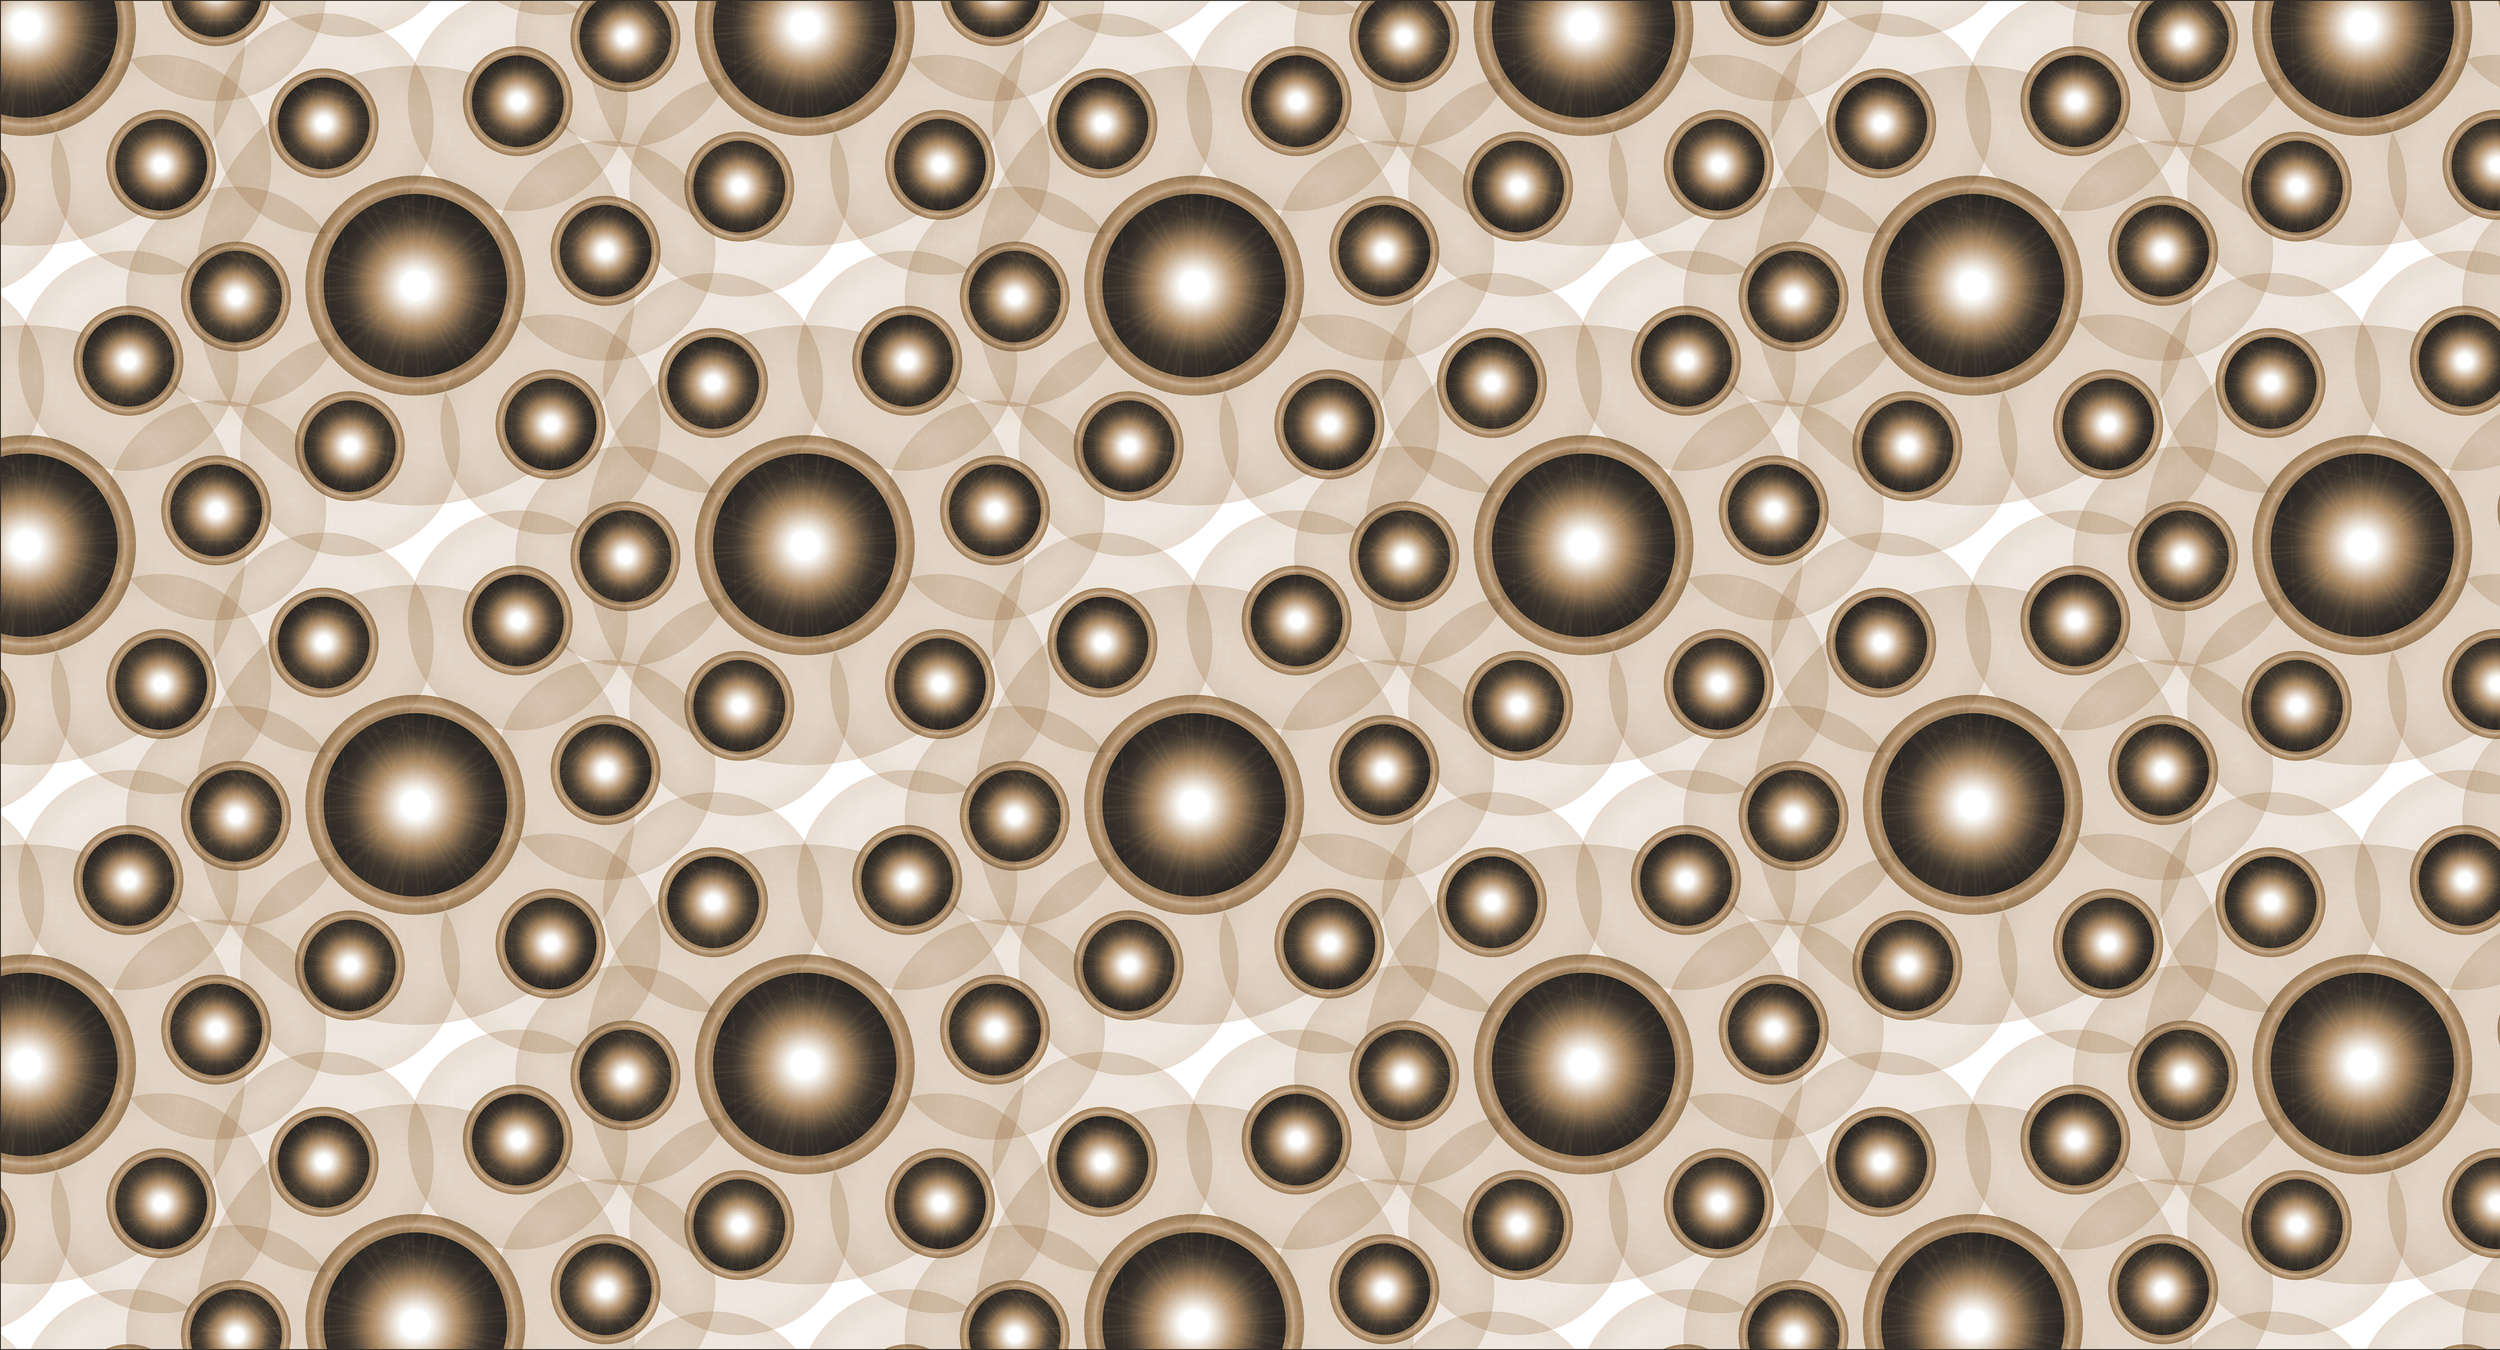             Photo wallpaper geometric circle & dot design - brown, white, orange
        